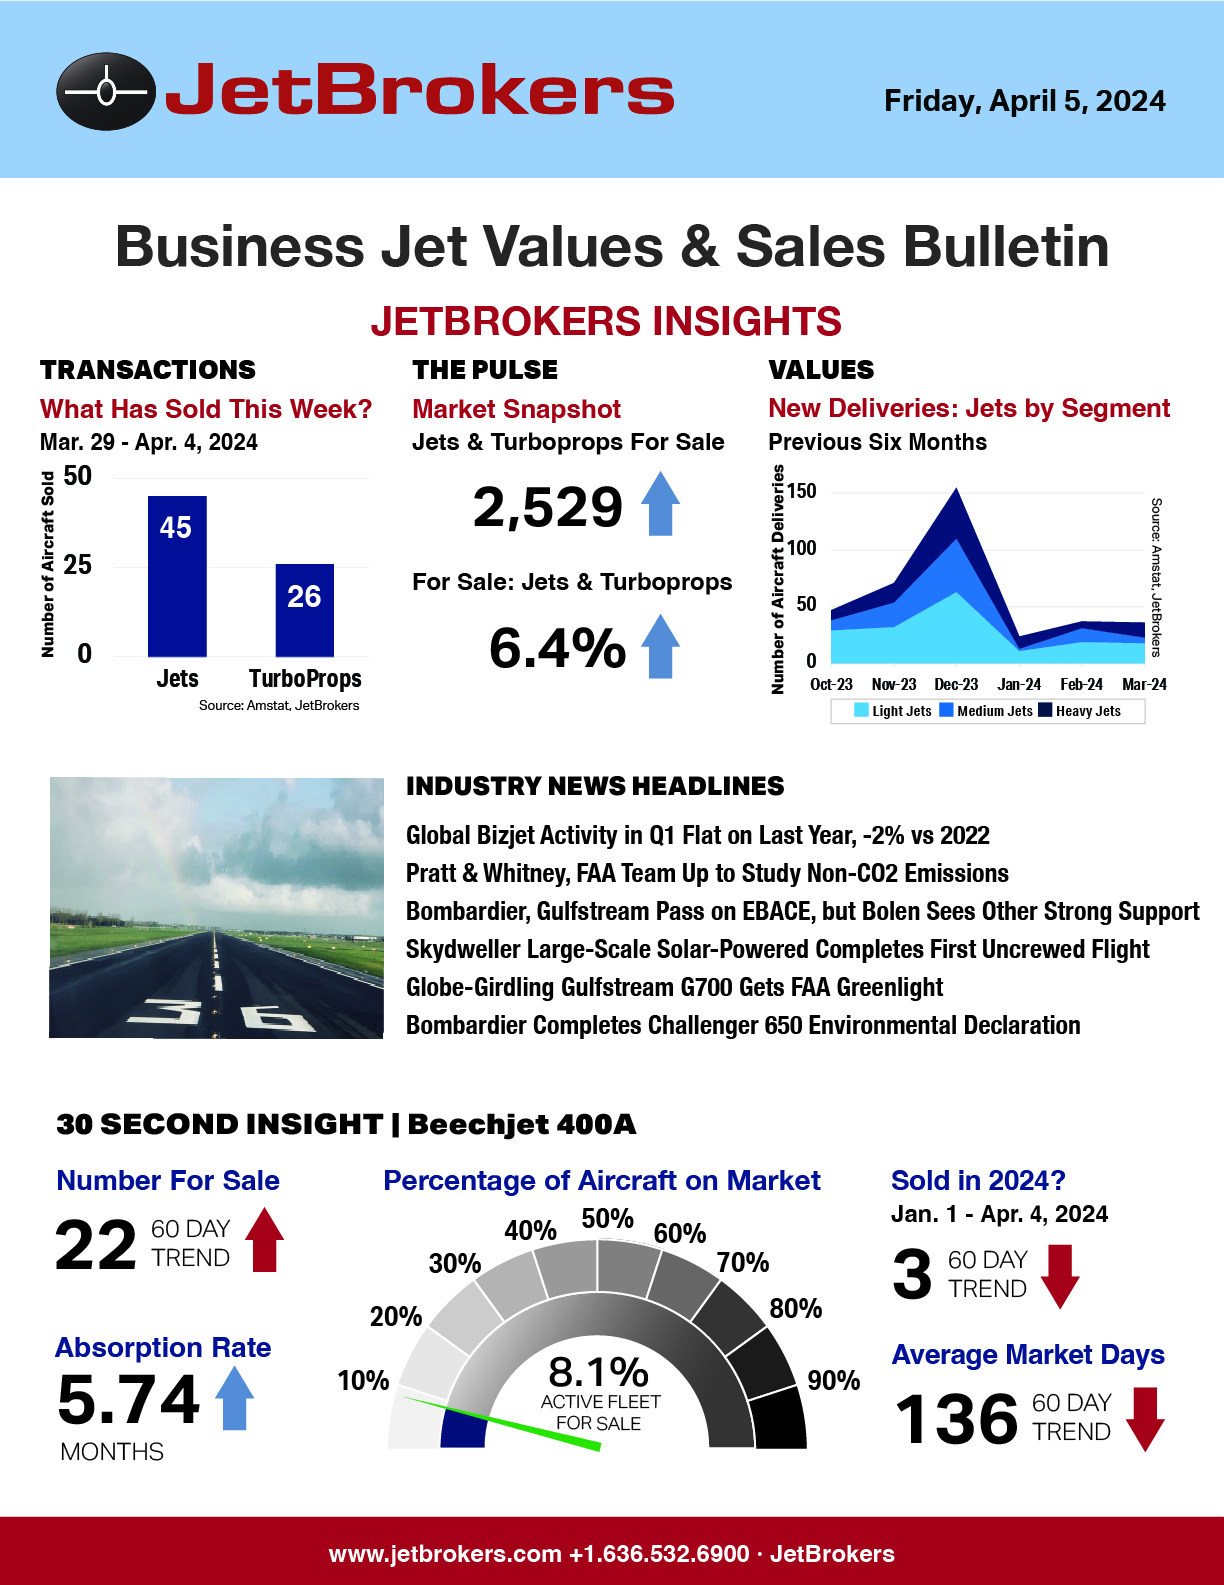 JetBrokers Business Jet Values & Sales Bulletin - April 5, 2024